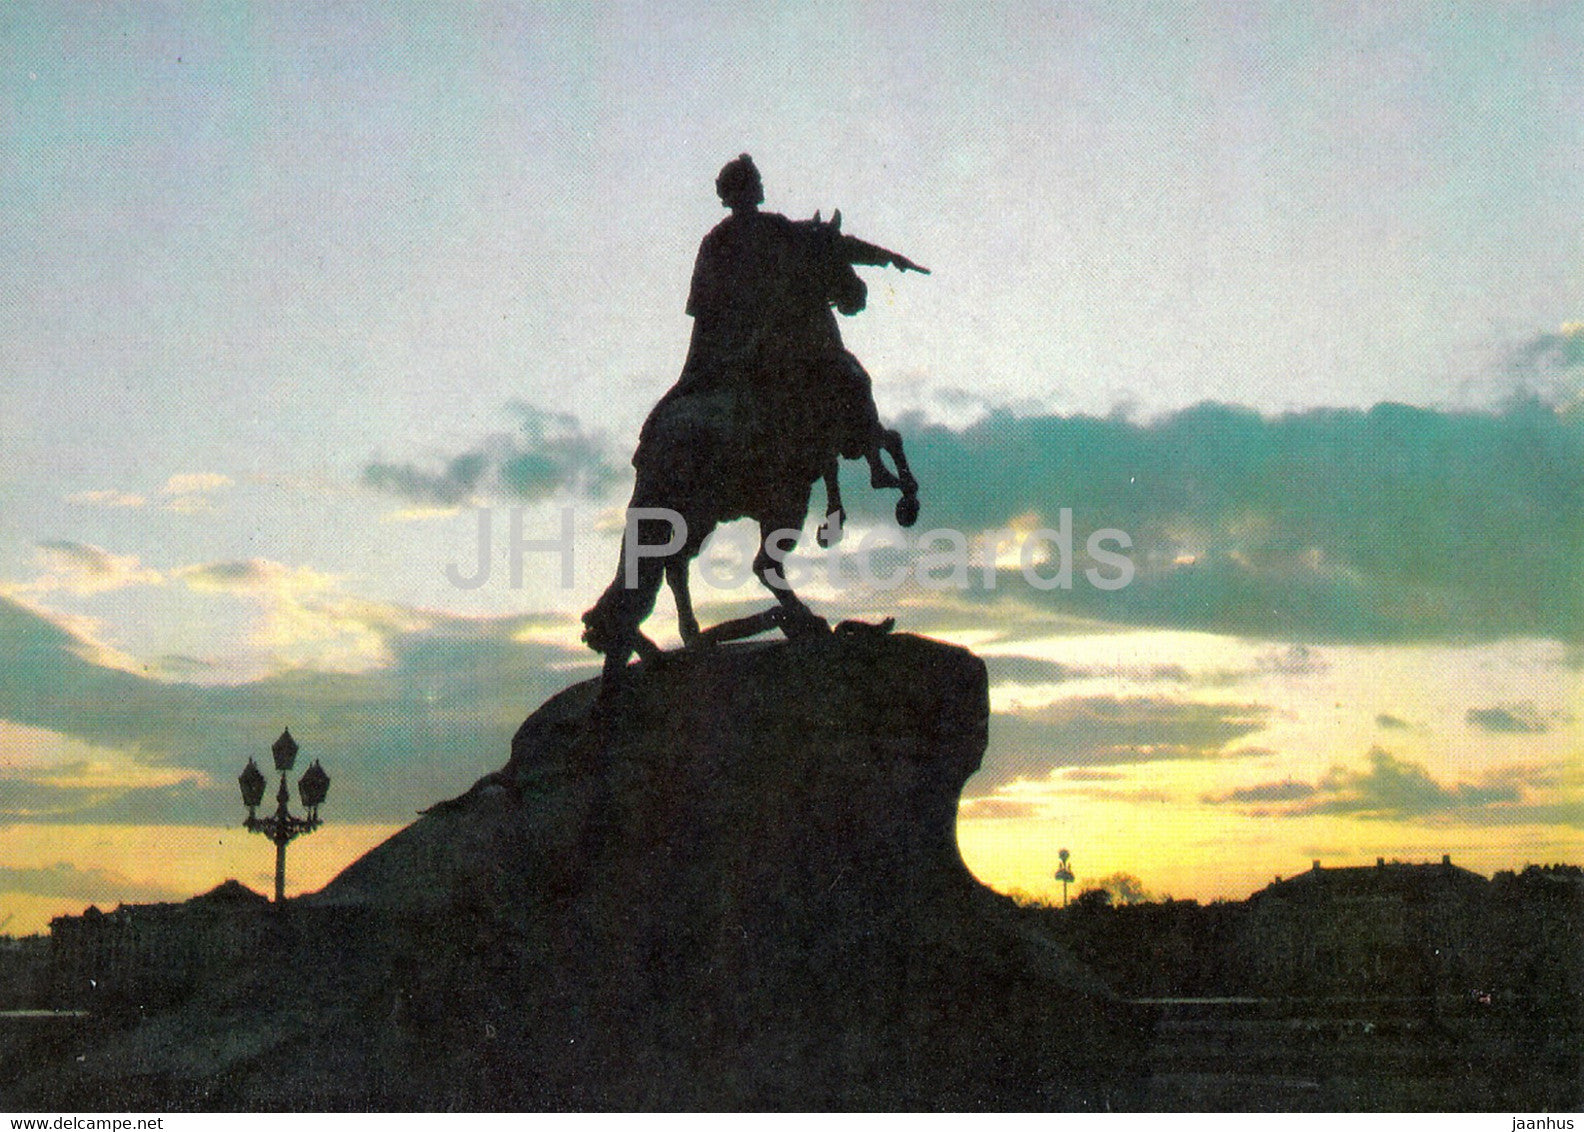 Leningrad - St Petersburg - monument to Peter I - Bronze Horseman - postal stationery - 1990 - Russia USSR - unused - JH Postcards